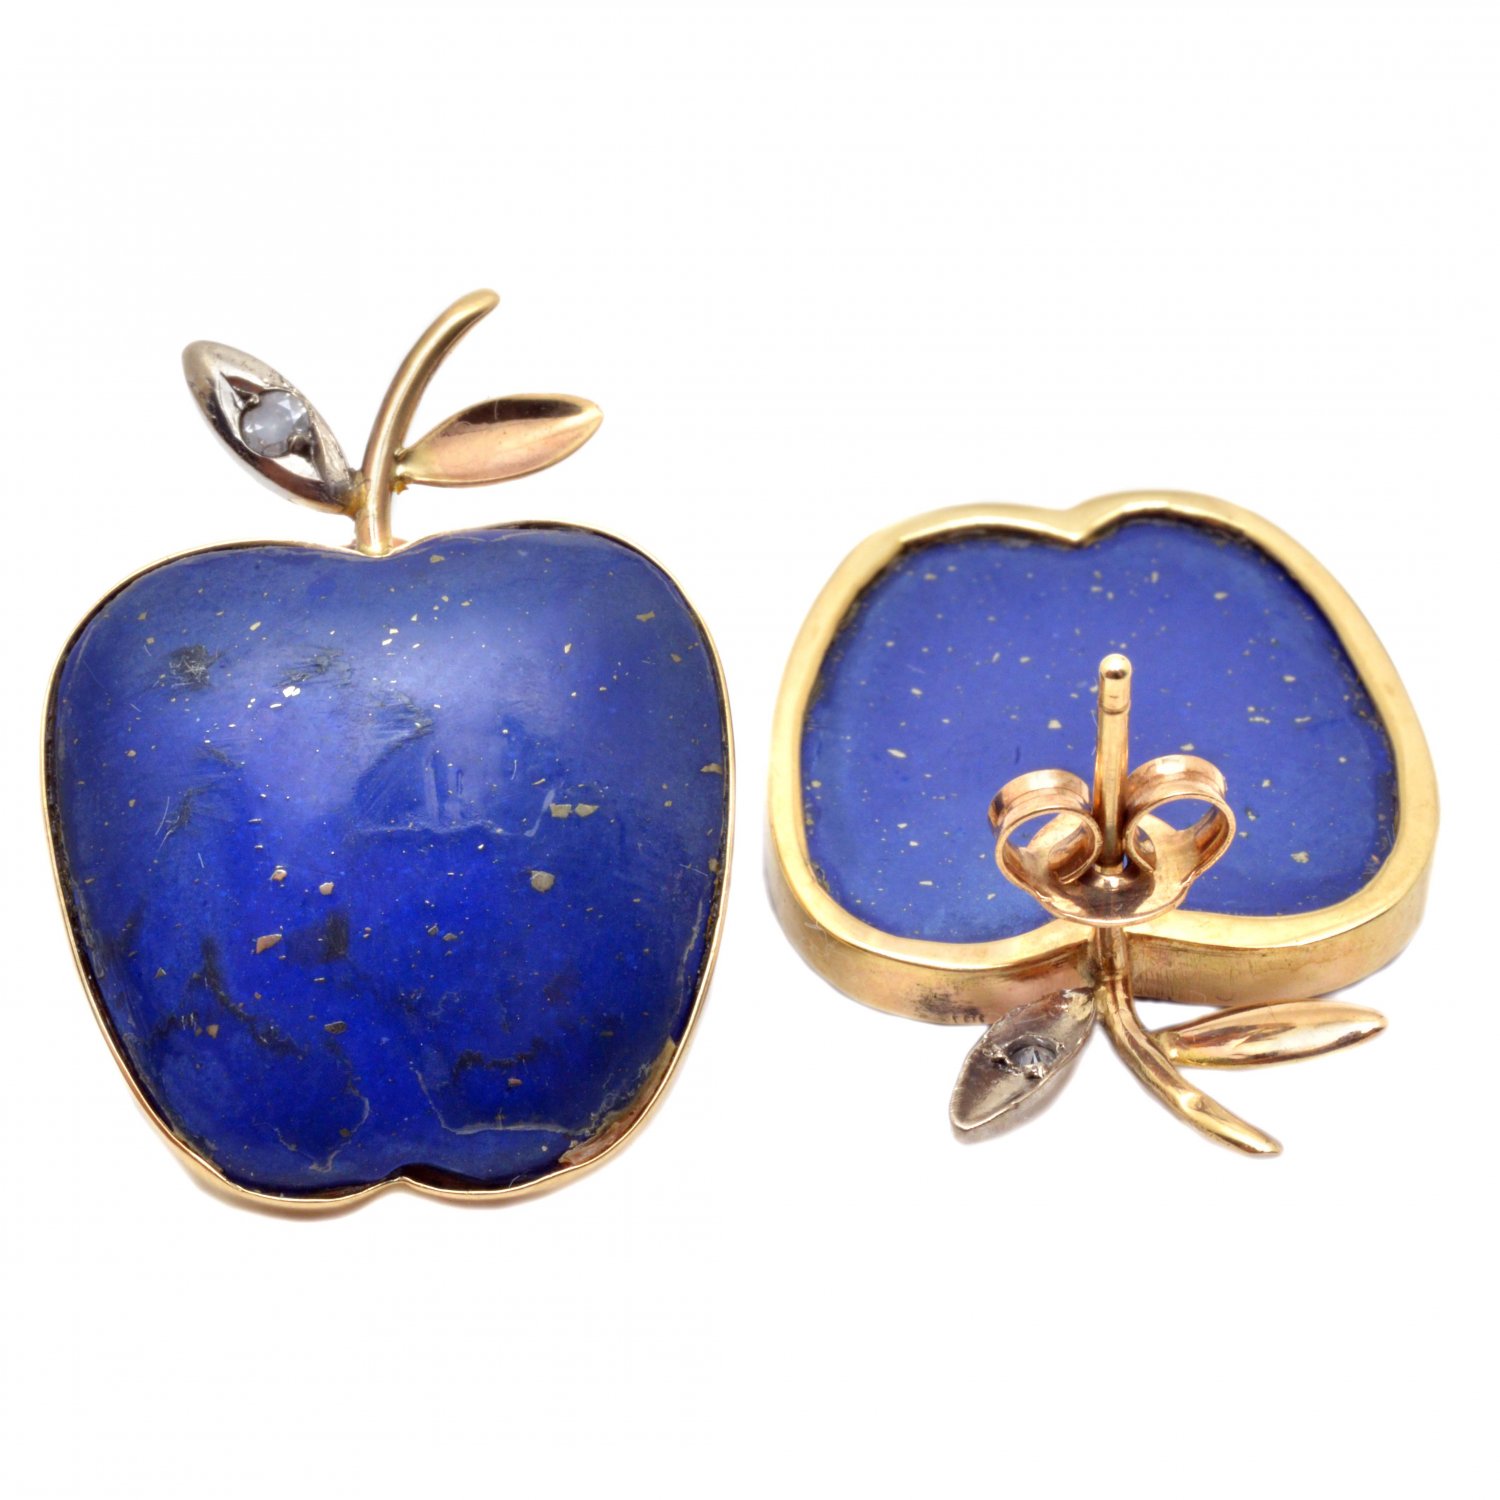 Mid Century Modernist 9ct Yellow Gold Hand Made Apple Shaped Cabachon Lapis Lazuli and Diamond Earrings [B259]